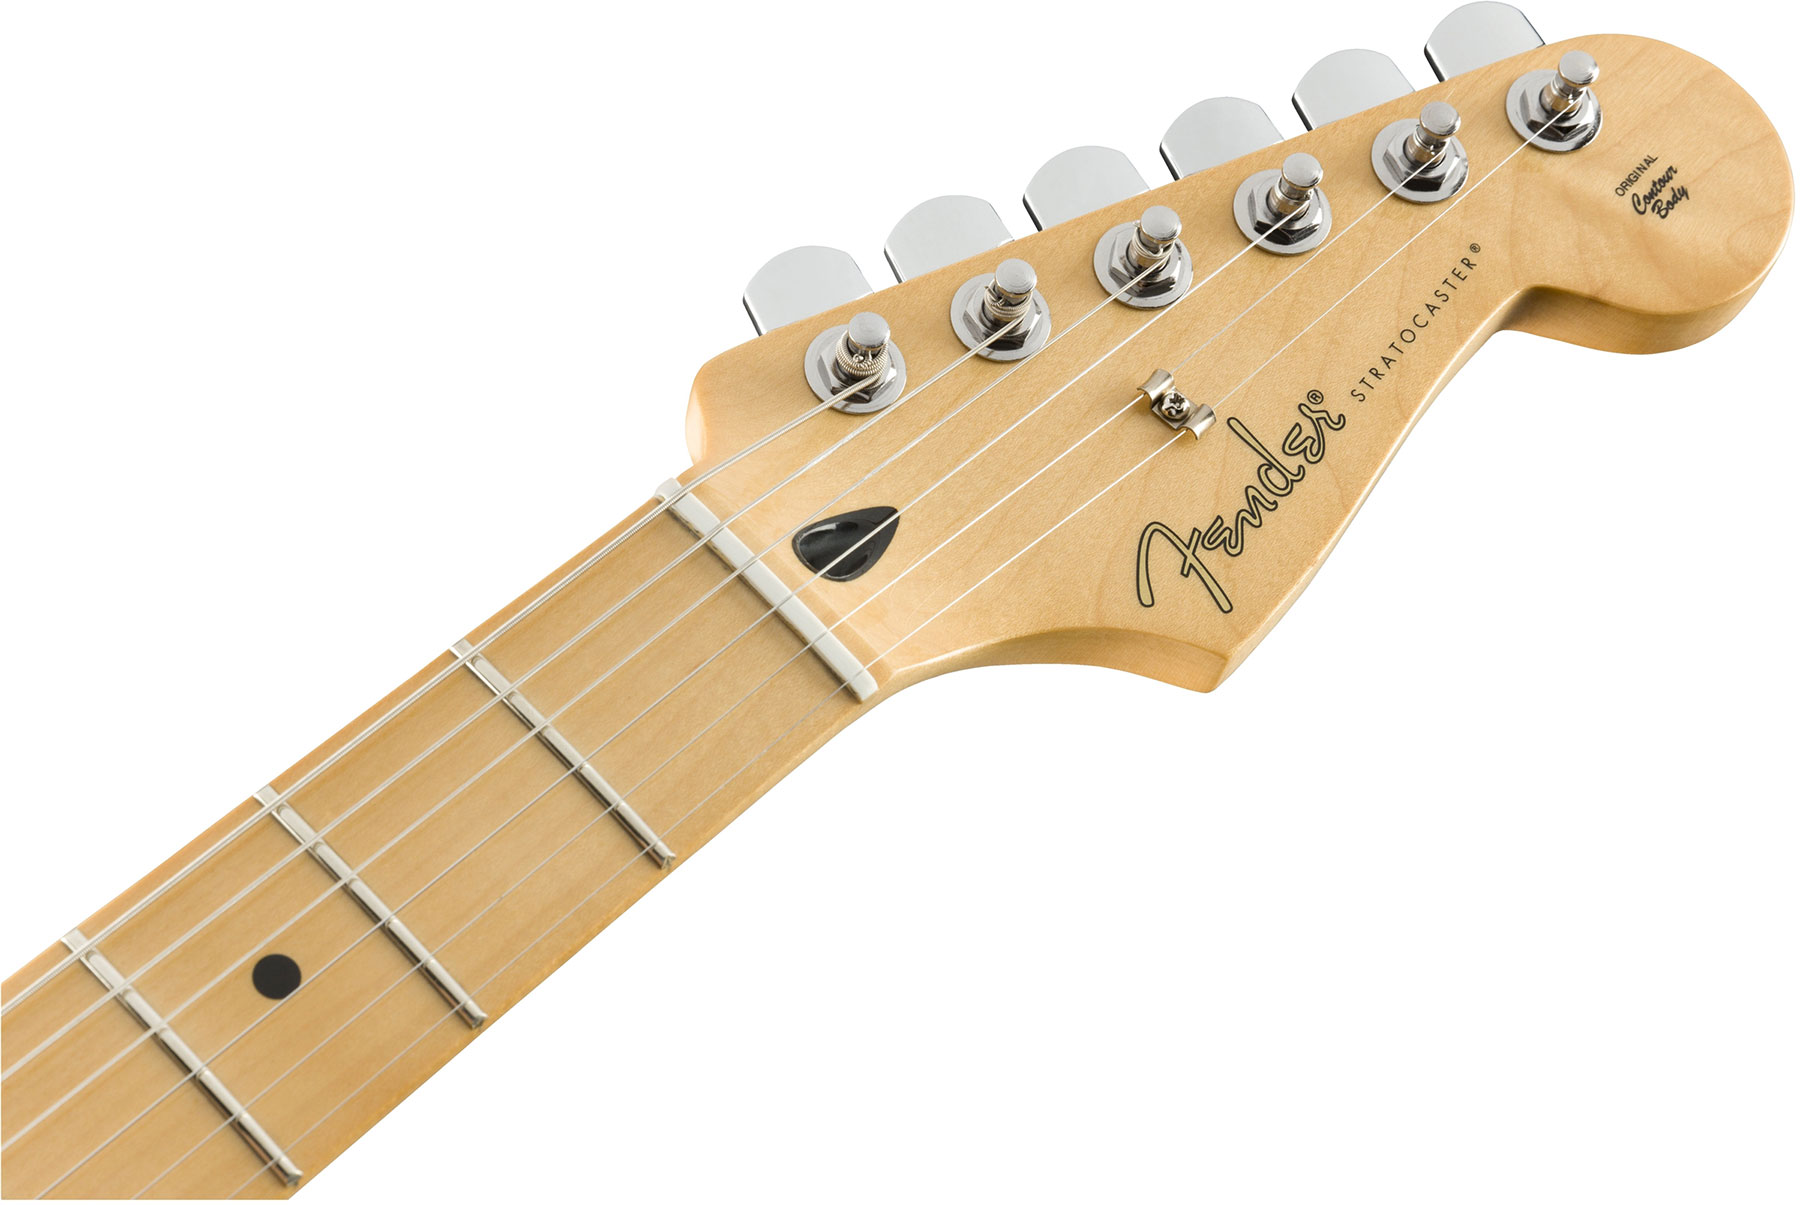 Fender Strat Player Mex Sss Pf - 3-color Sunburst - Guitare Électrique Forme Str - Variation 2